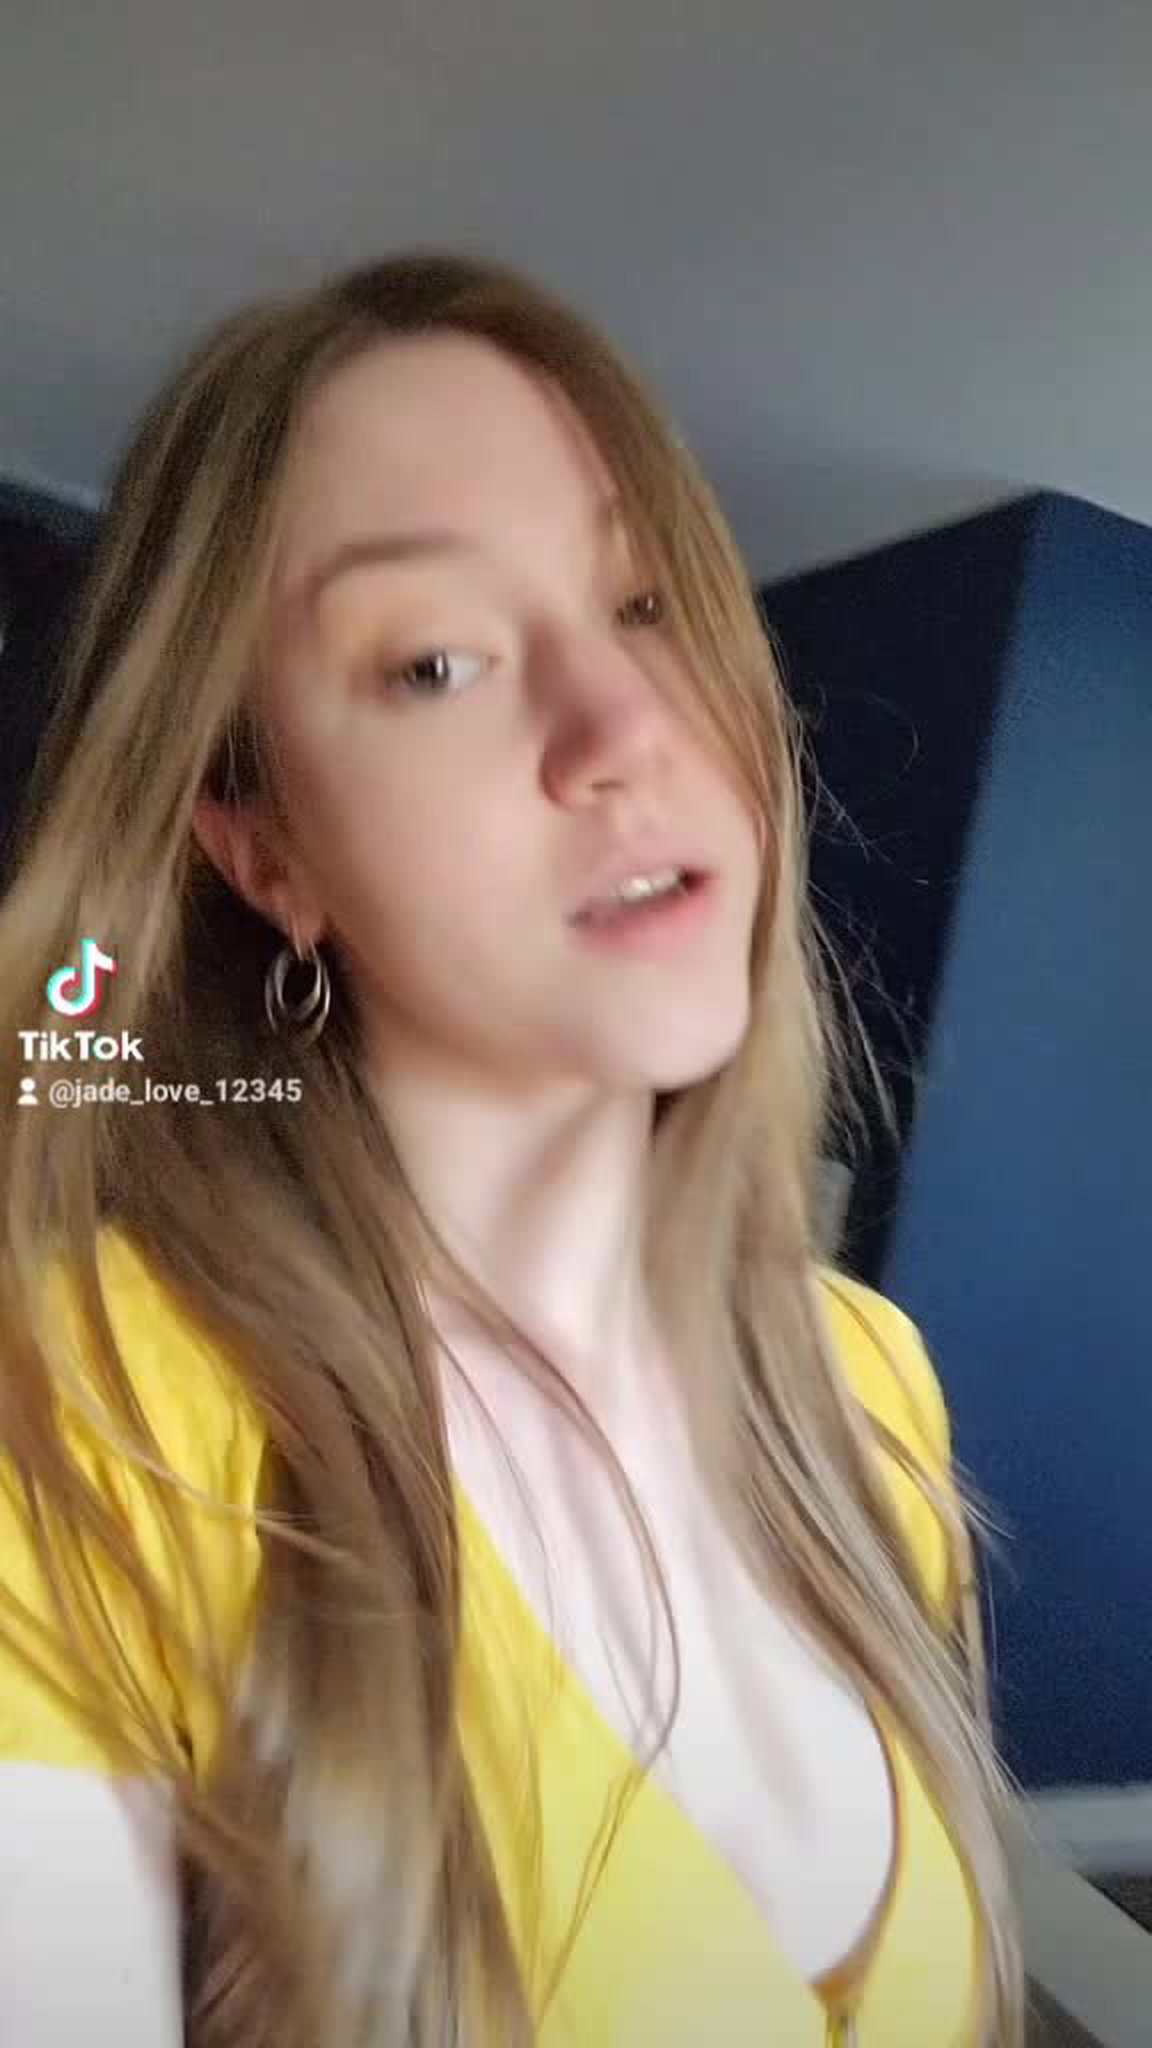 Video post by Jade